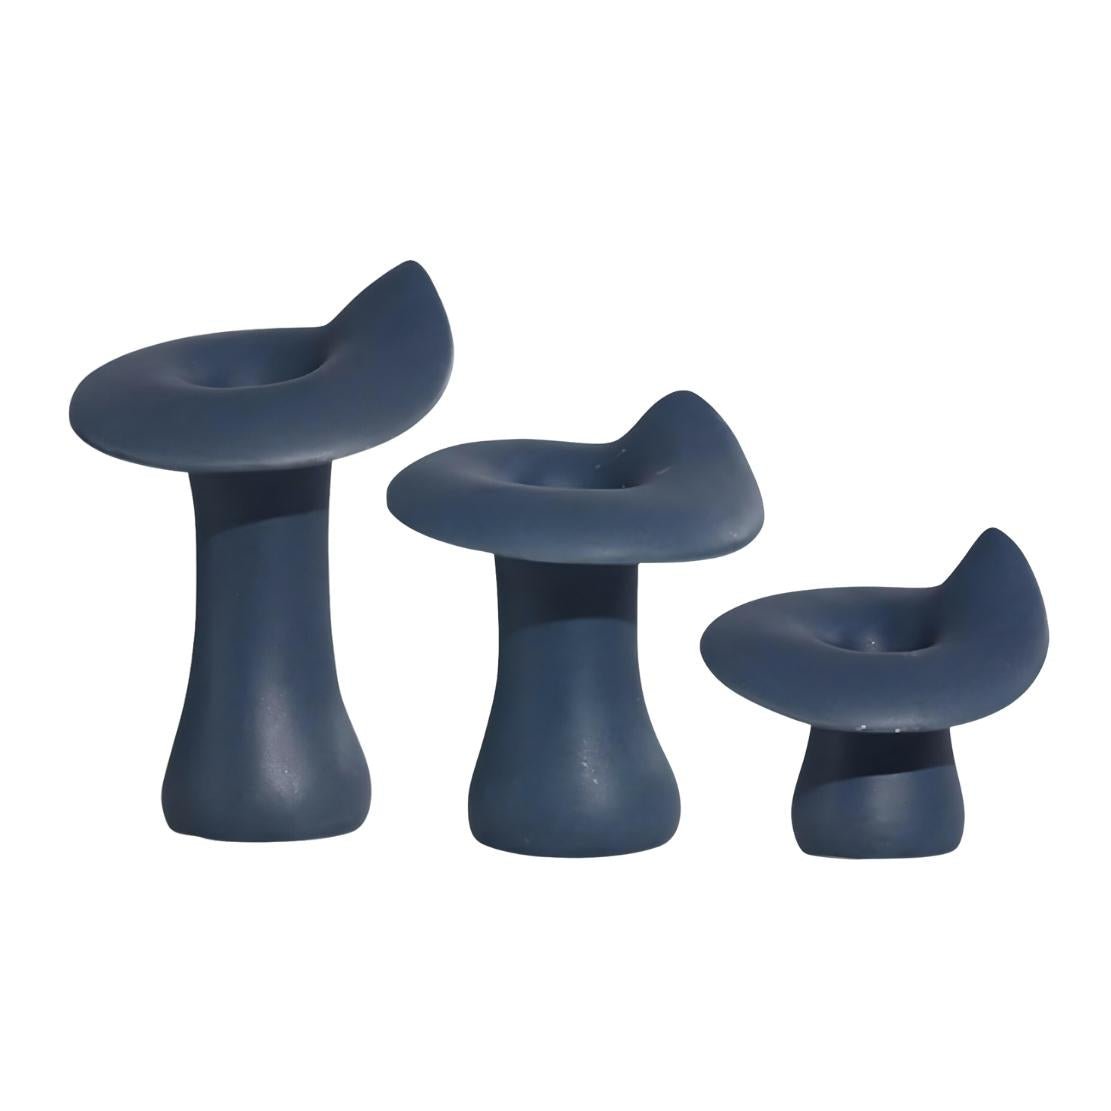 Blue, ceramic mushroom design candlestick holders in three sizes